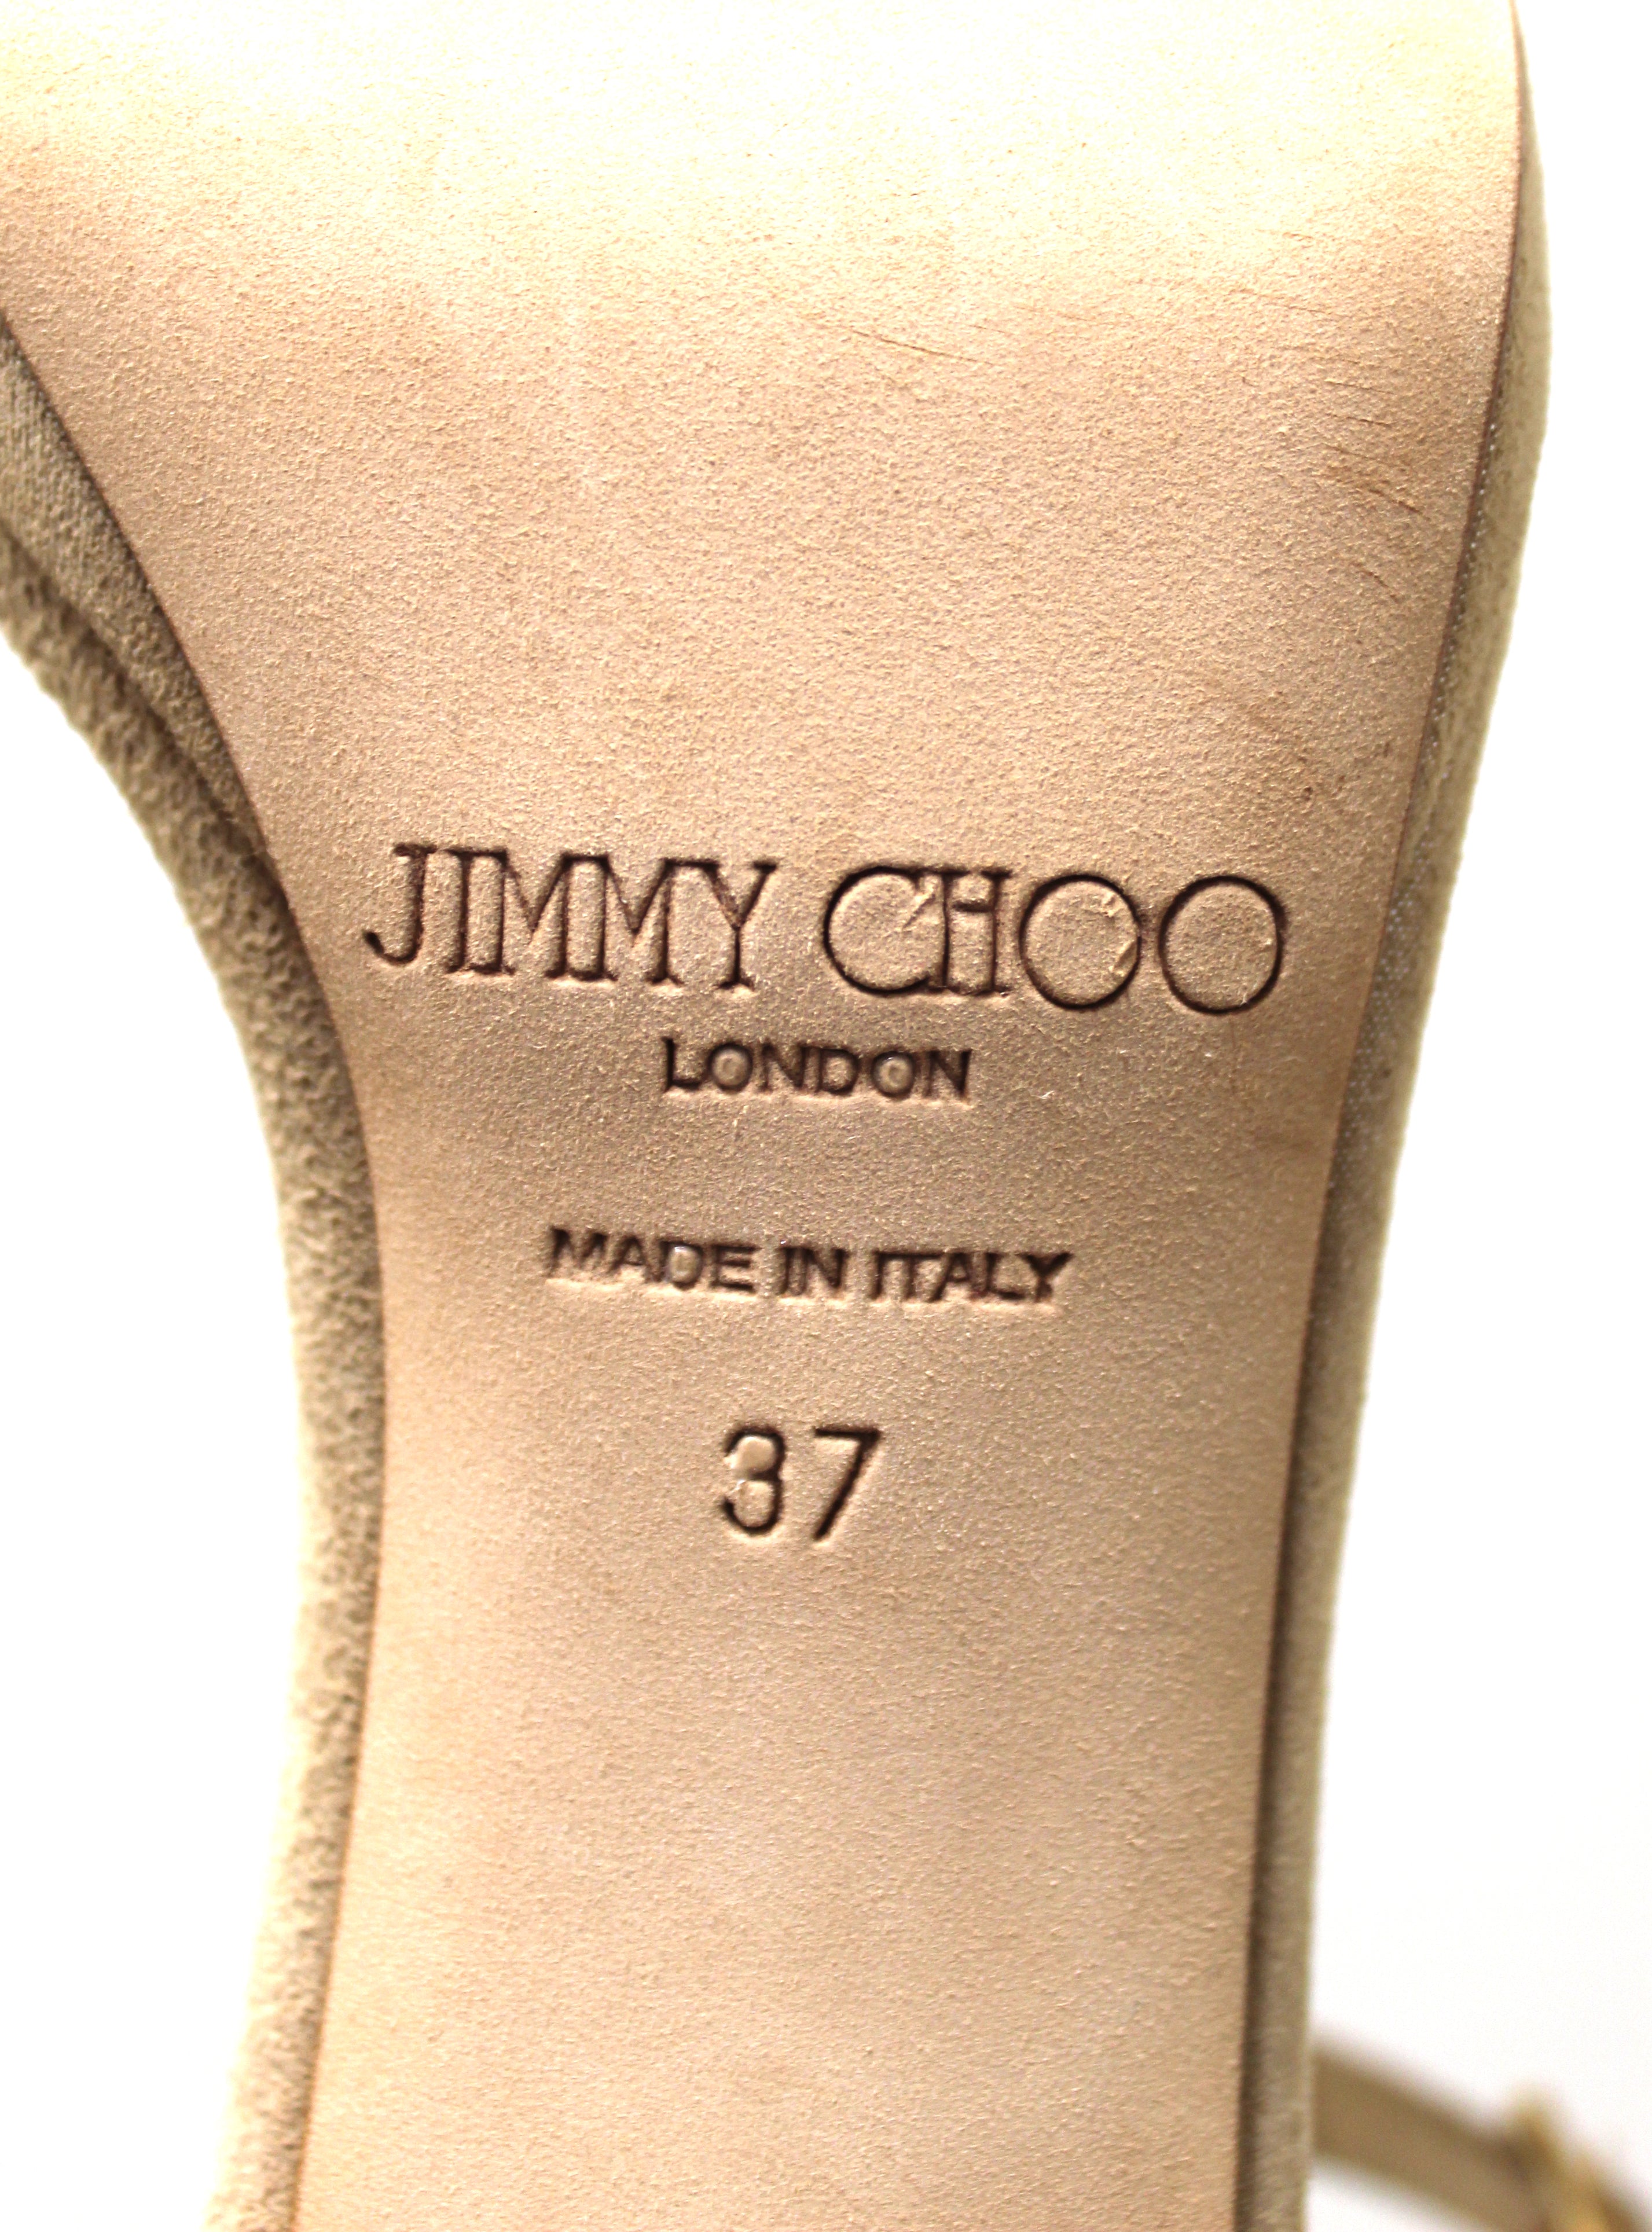 Authentic Jimmy Choo Champagne Gold Glitter Pandora Pump Heel Sandal Size 37